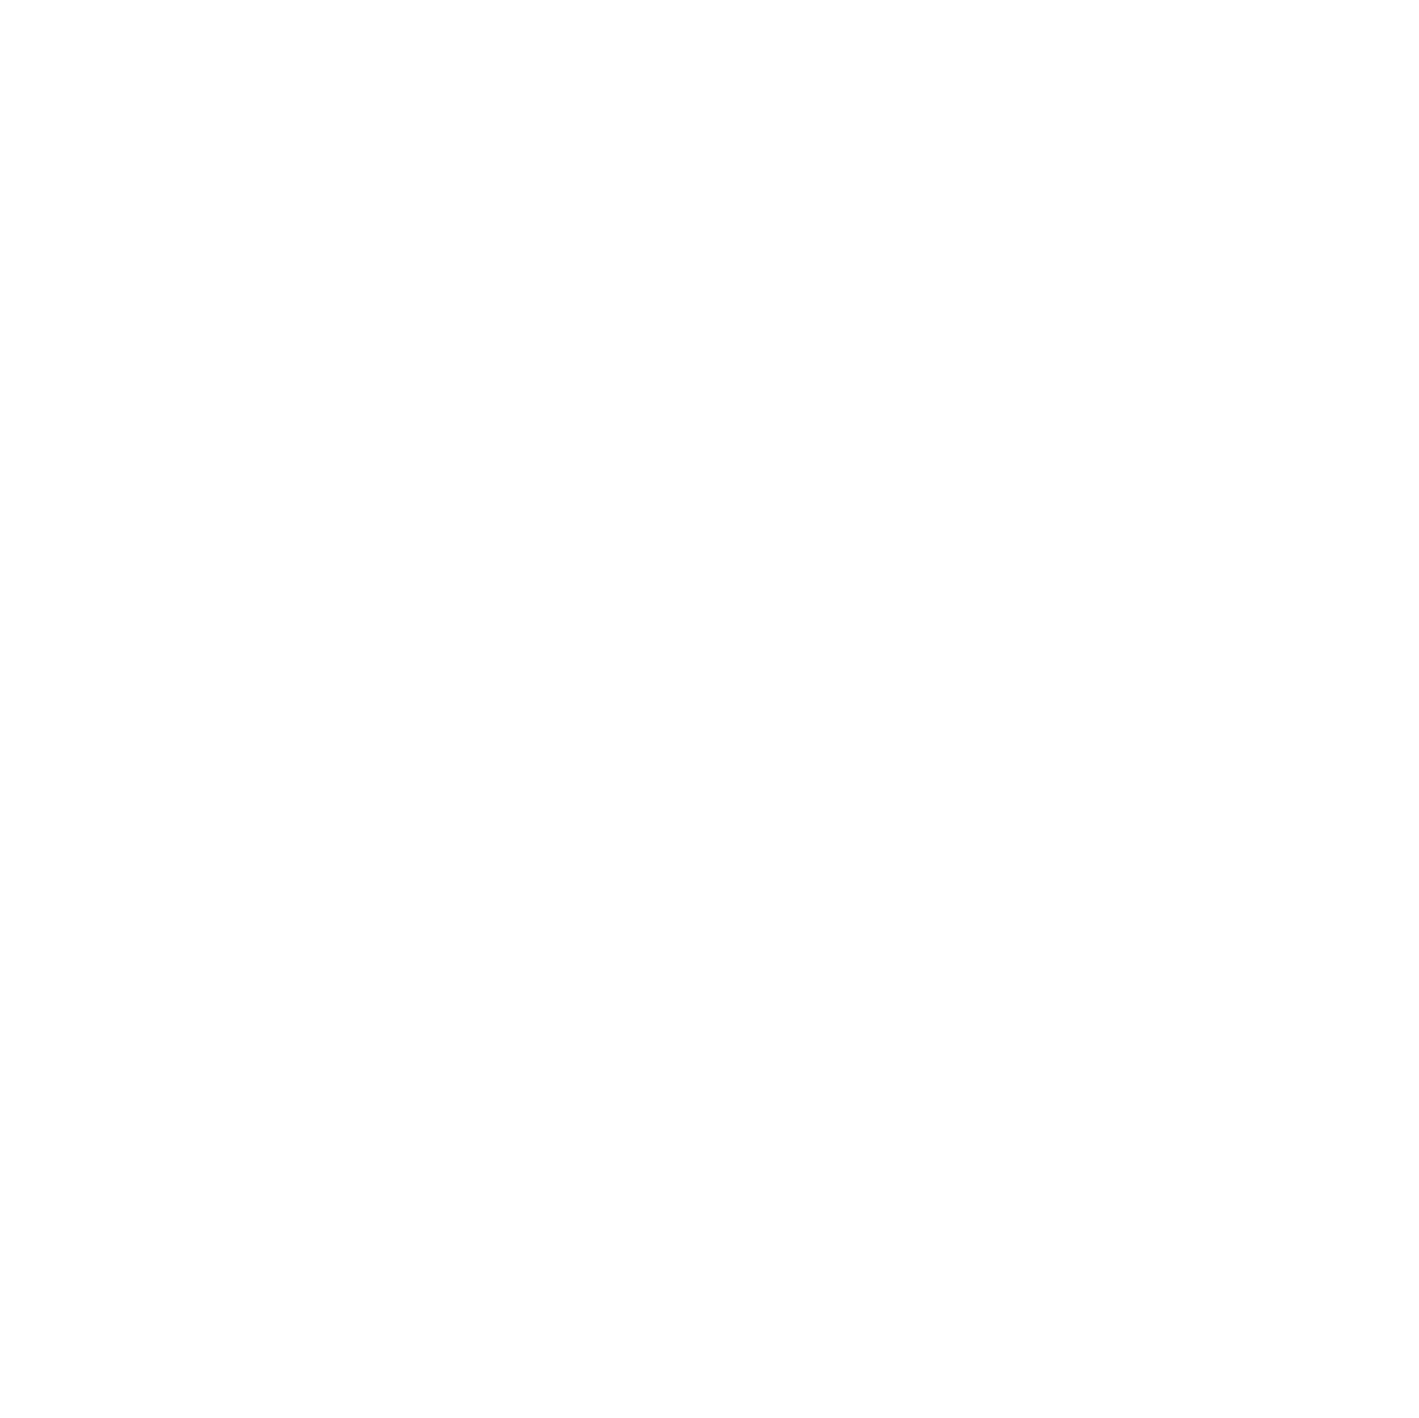 Partner Legal For Digital